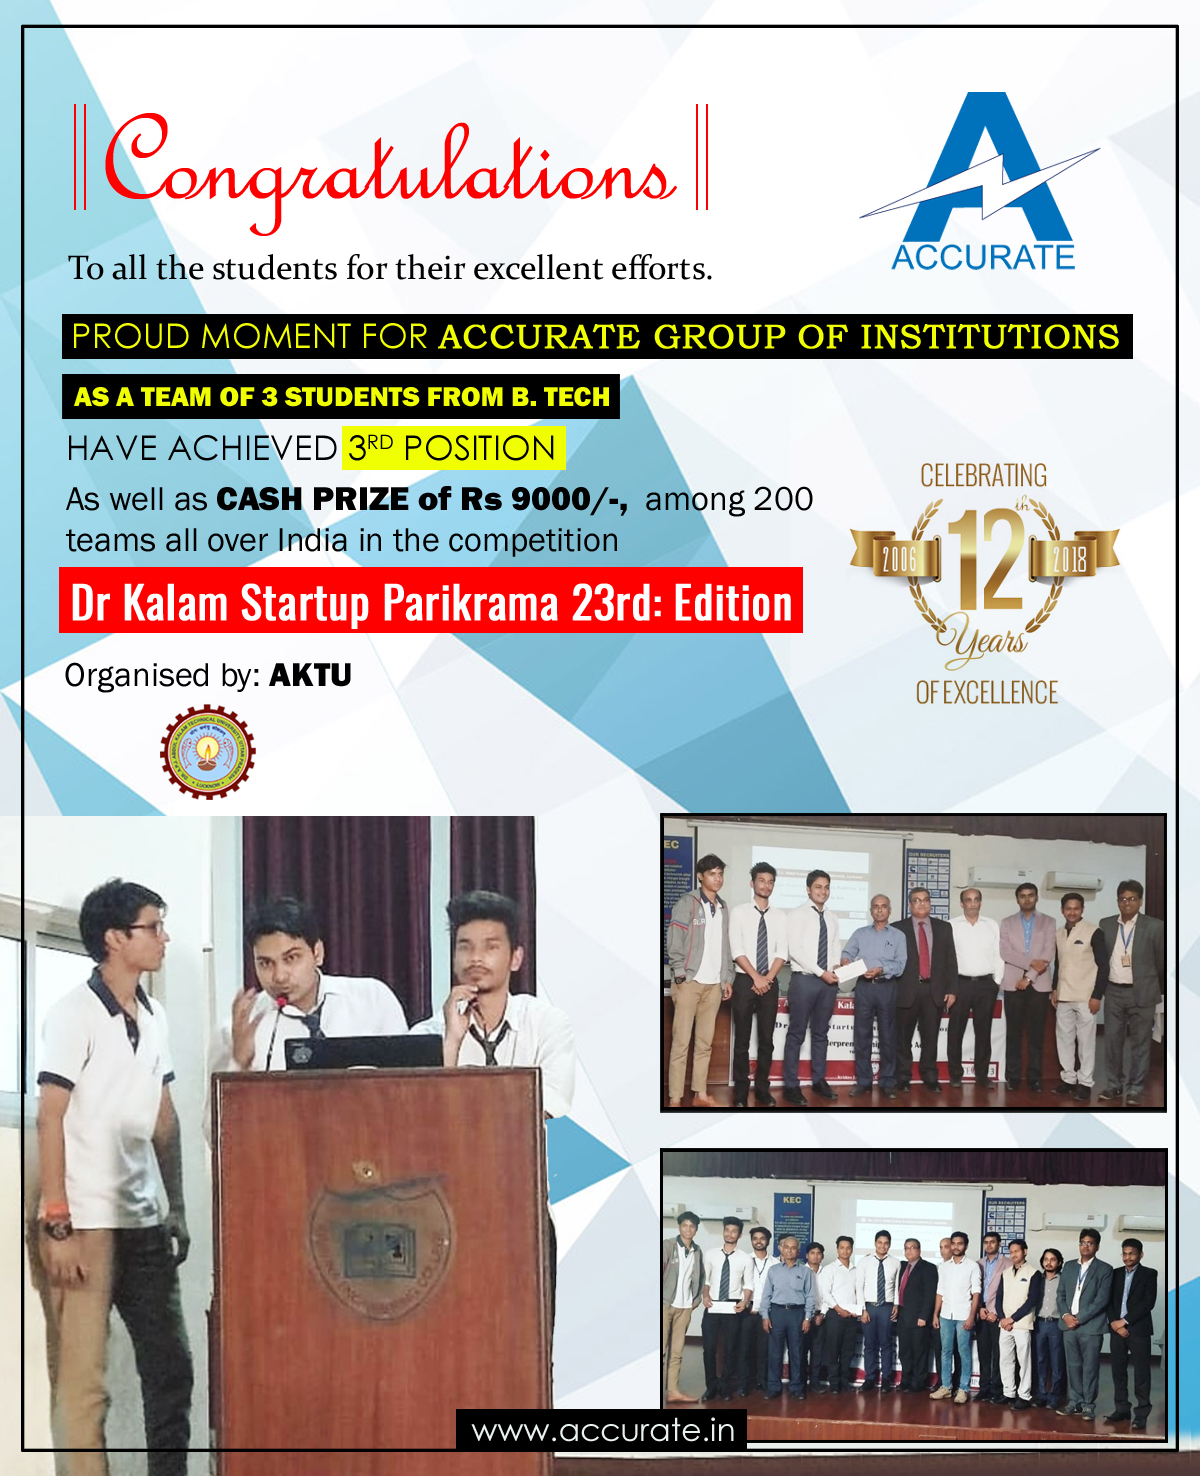 Dr Kalam Startup Parikrama 23rd: Edition